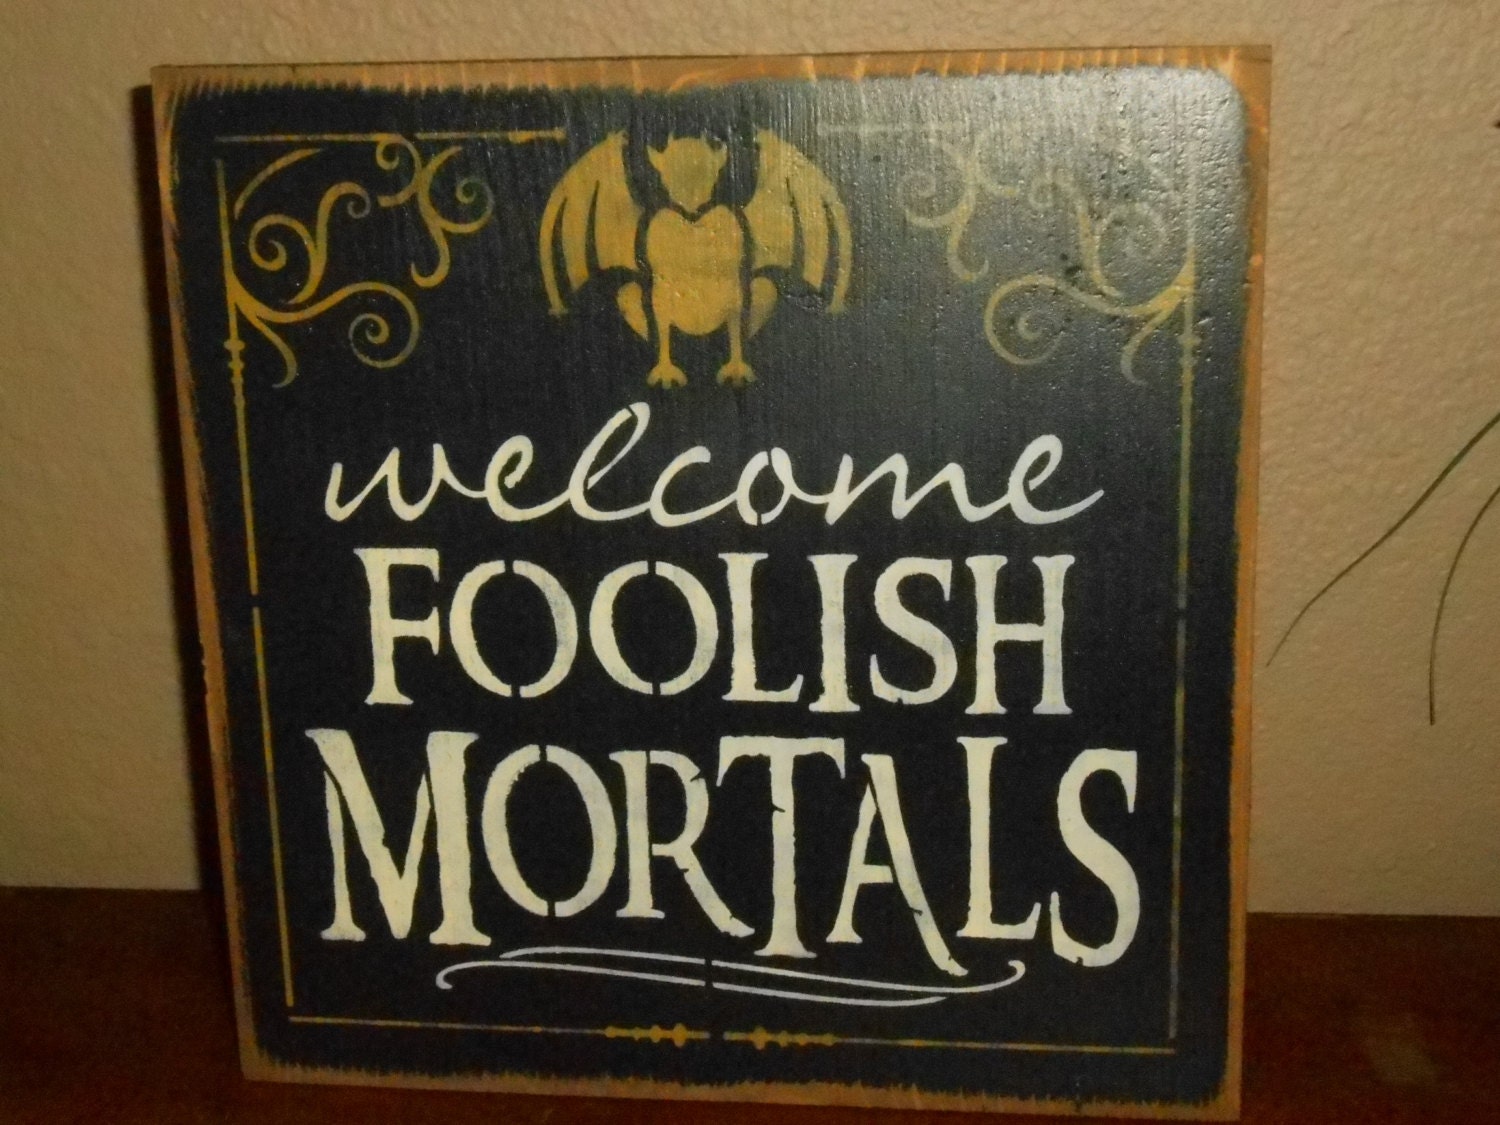  Welcome  Foolish  Mortals  primitive wood sign halloween